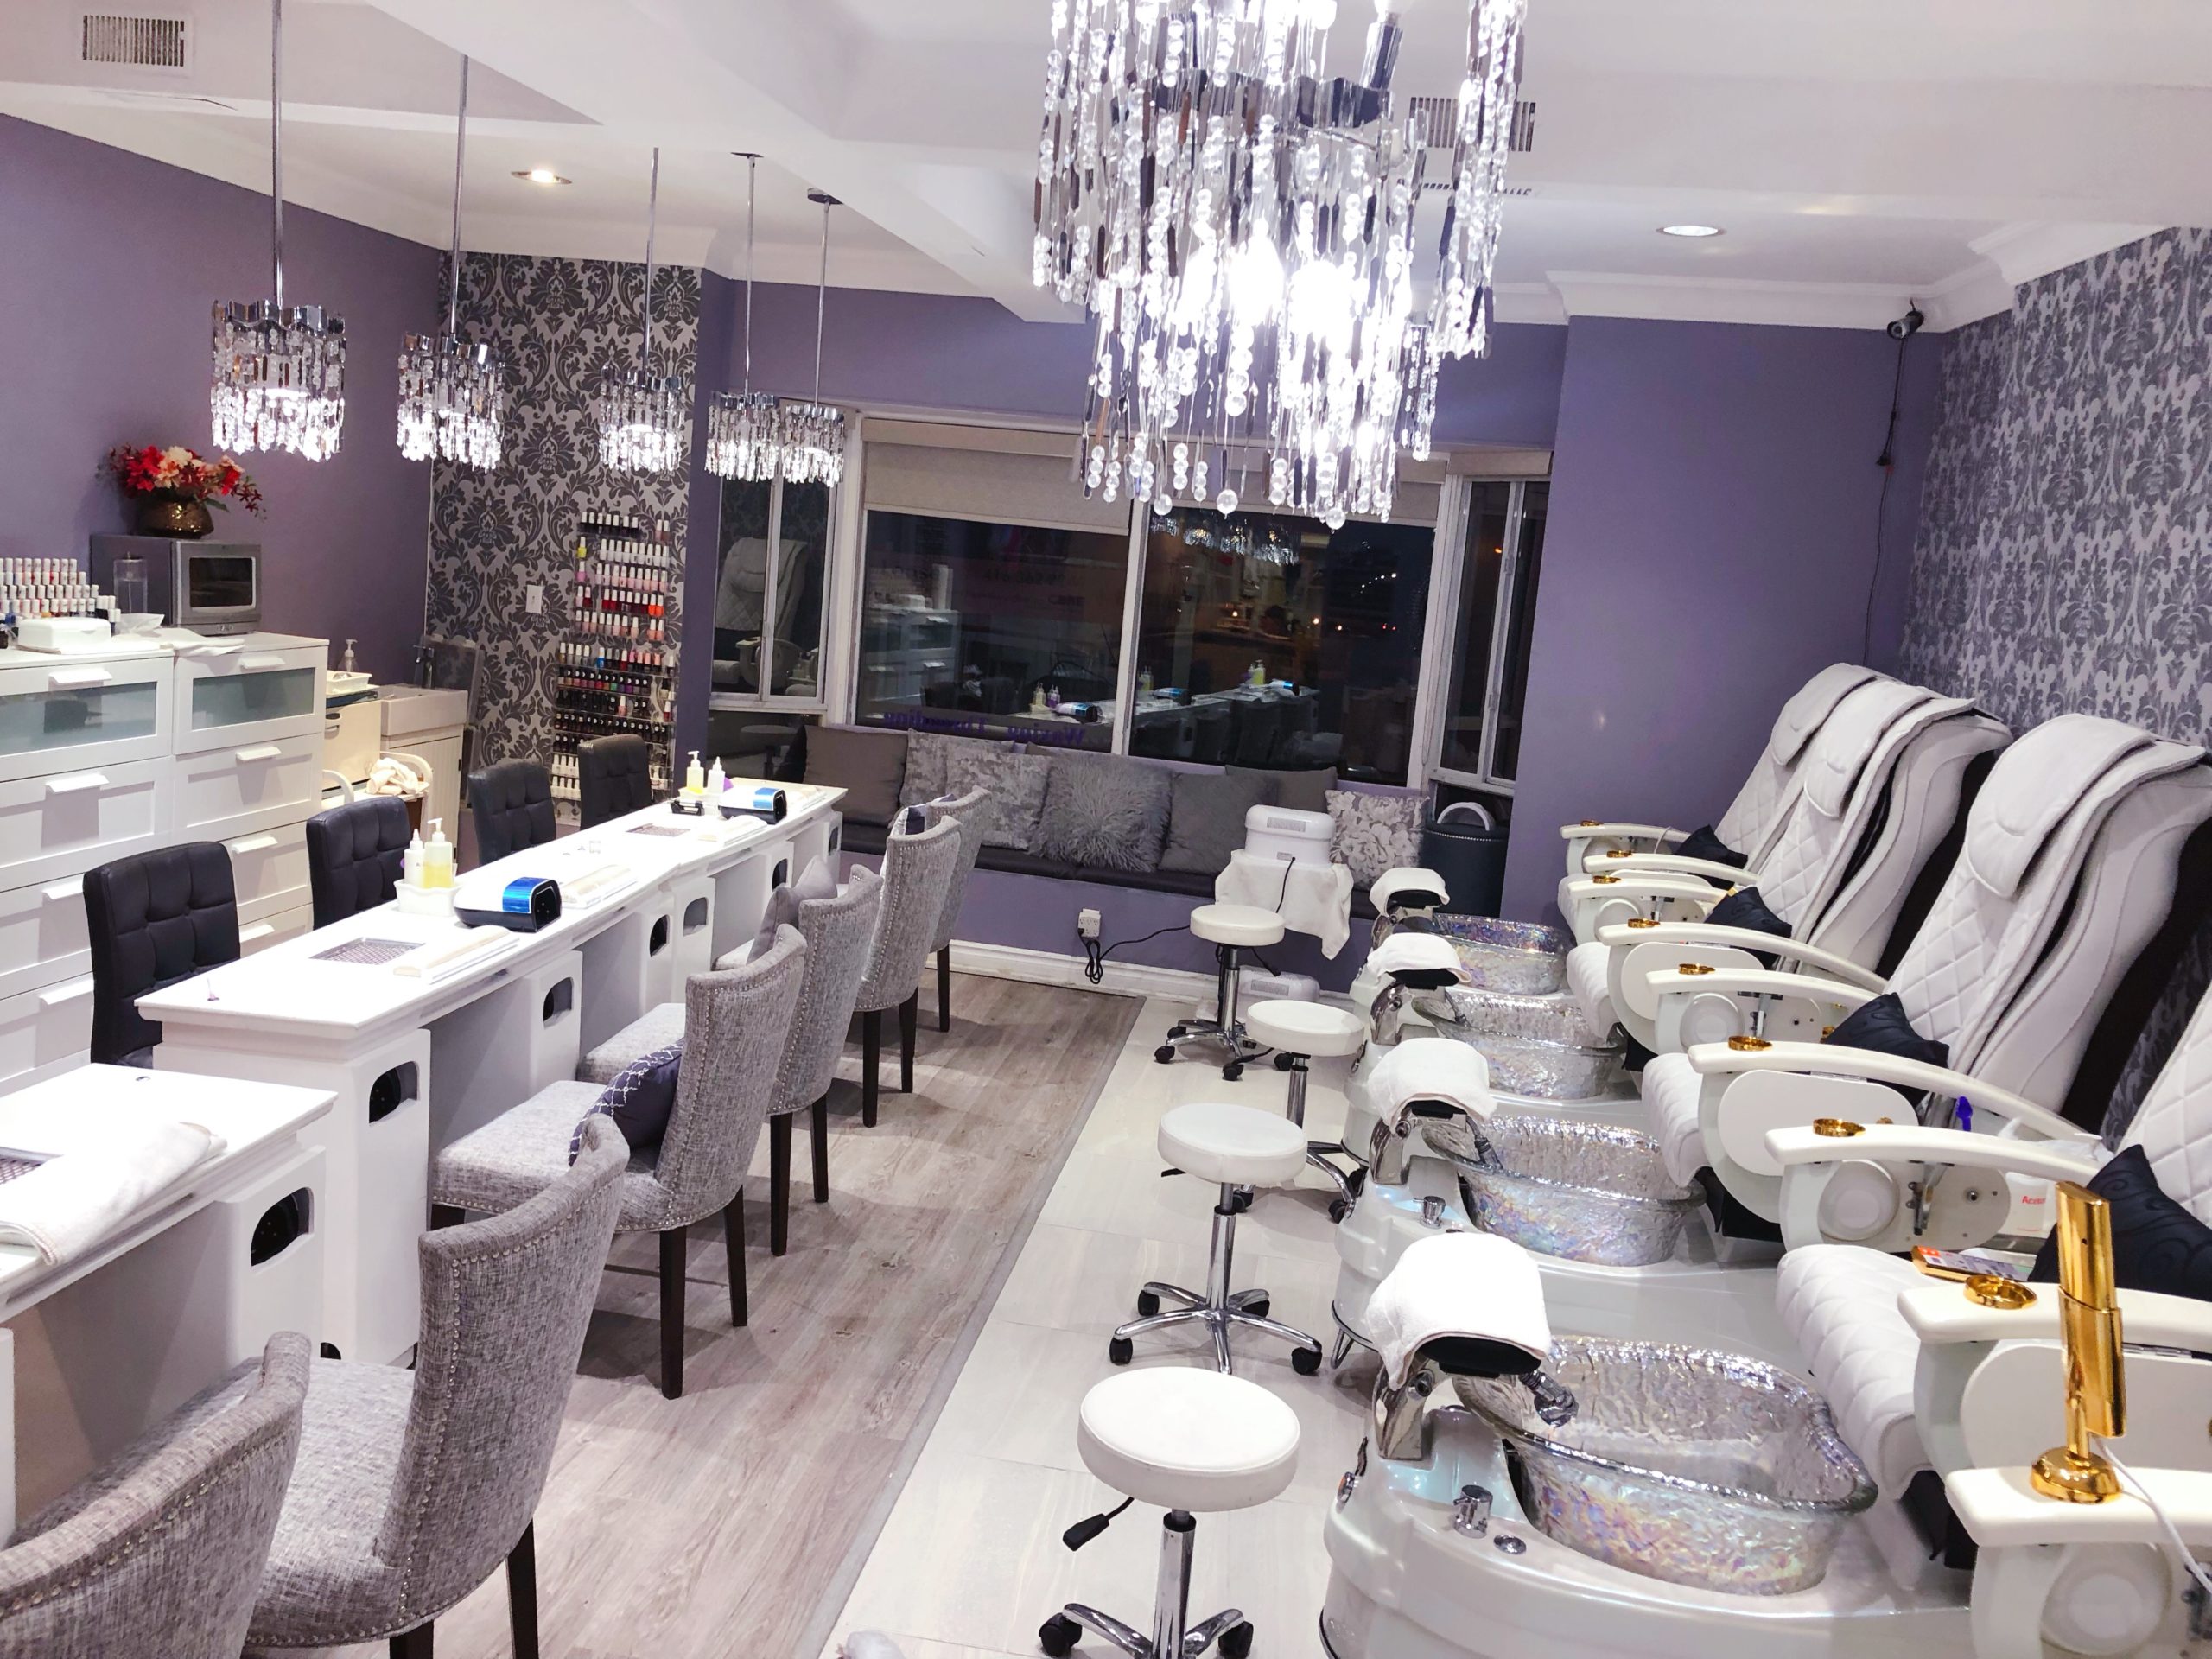 Ananeke Beauty Salon and Spa